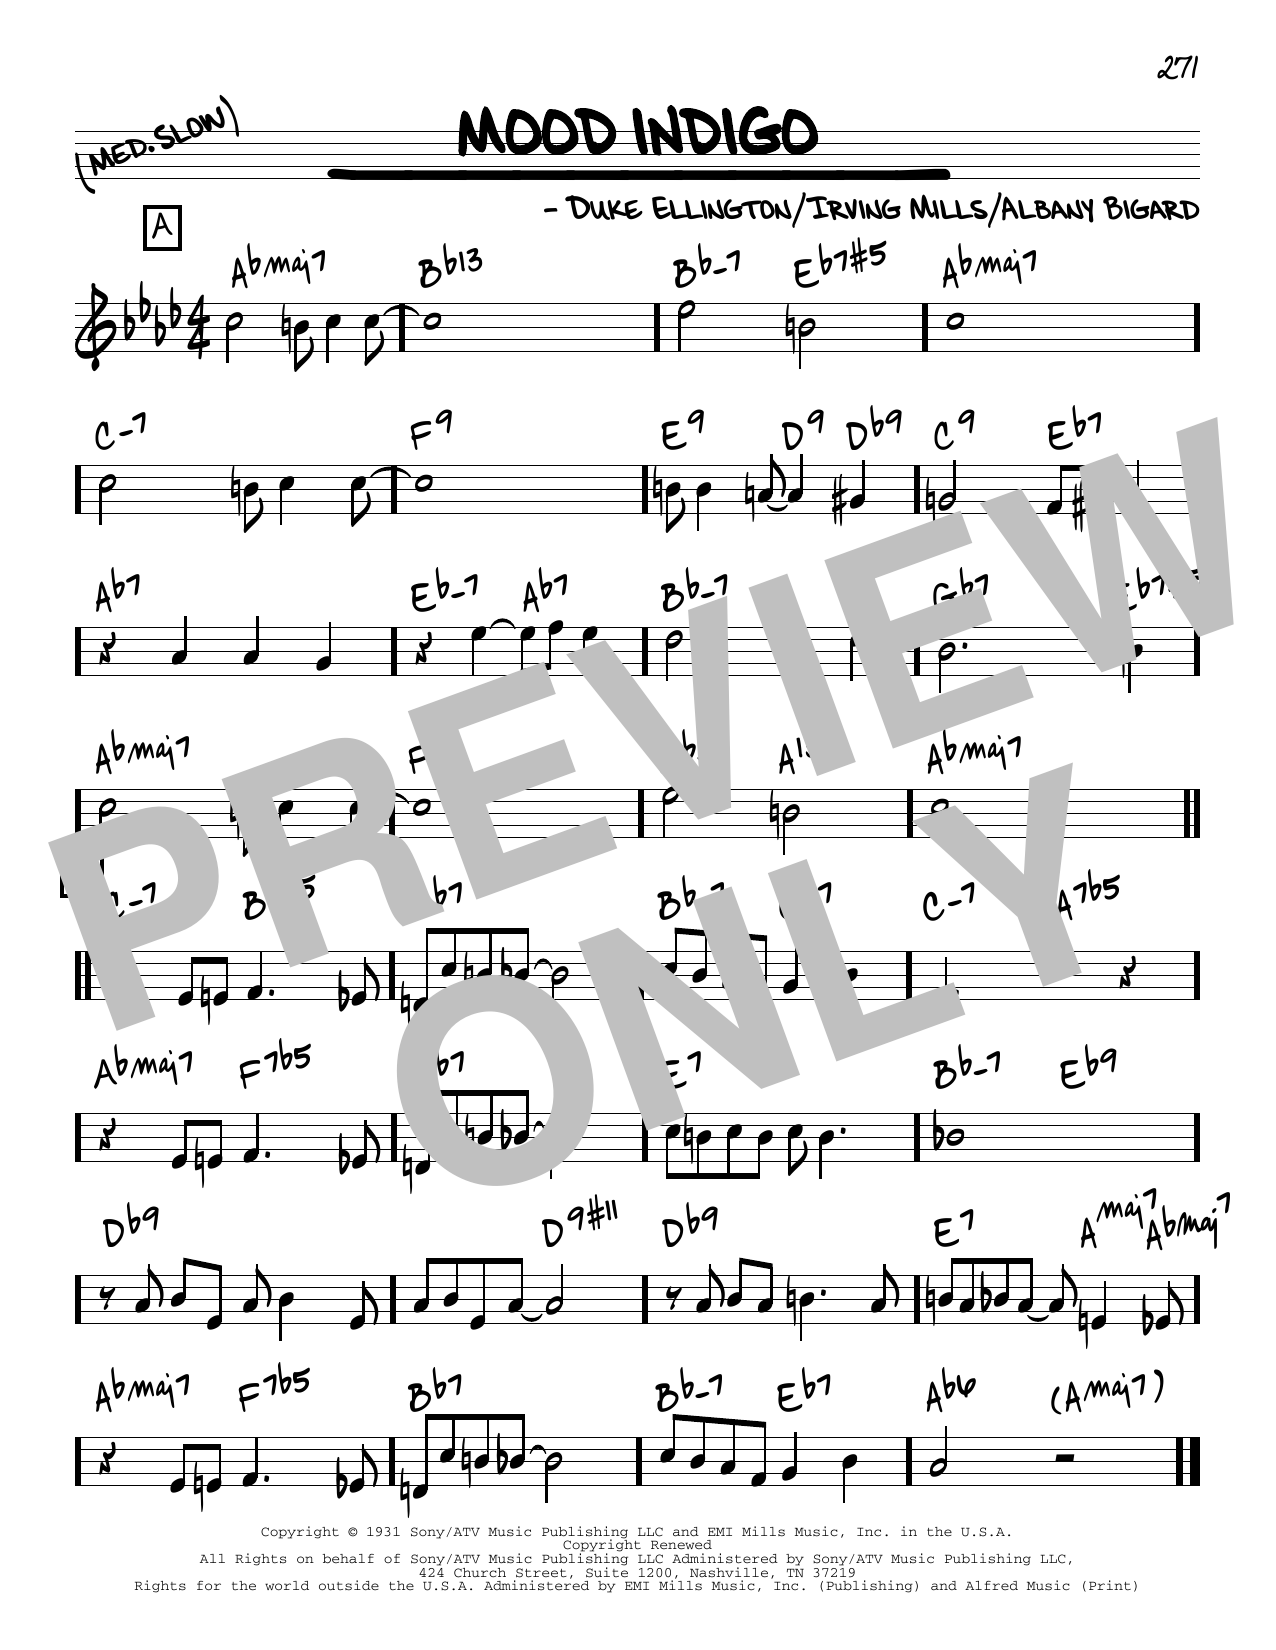 Download Duke Ellington Mood Indigo [Reharmonized version] (arr Sheet Music